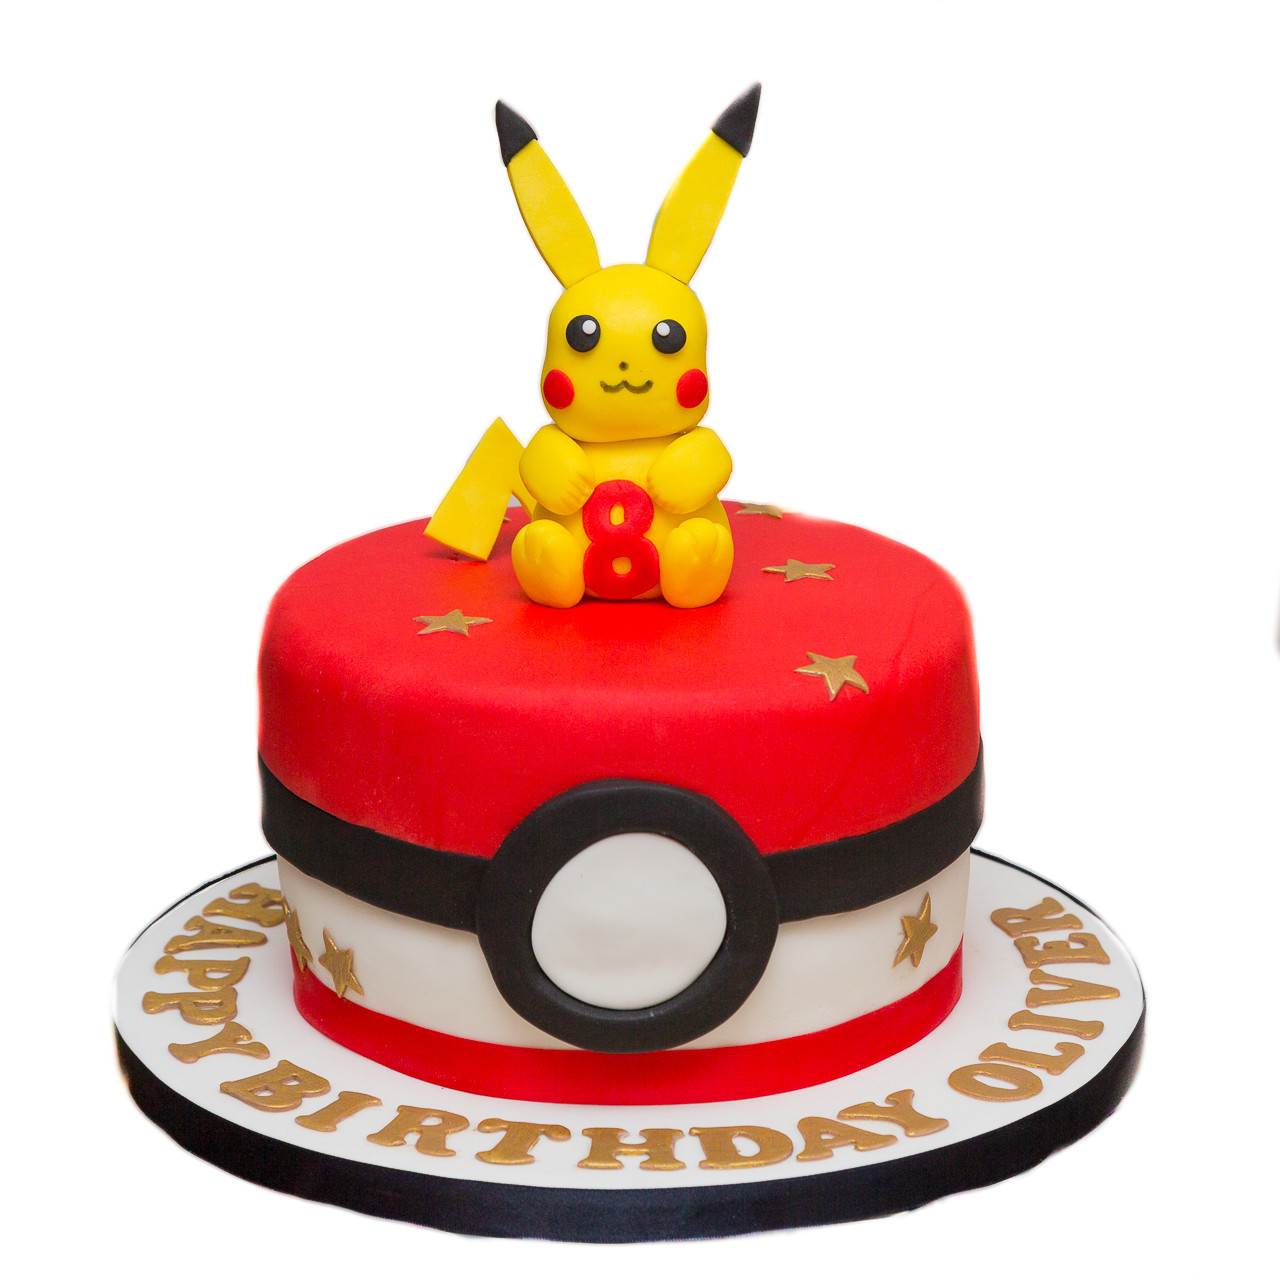 Pokemon Birthday Cakes
 Easy Egg Less Chocolate Birthday Cake by The Berkshire